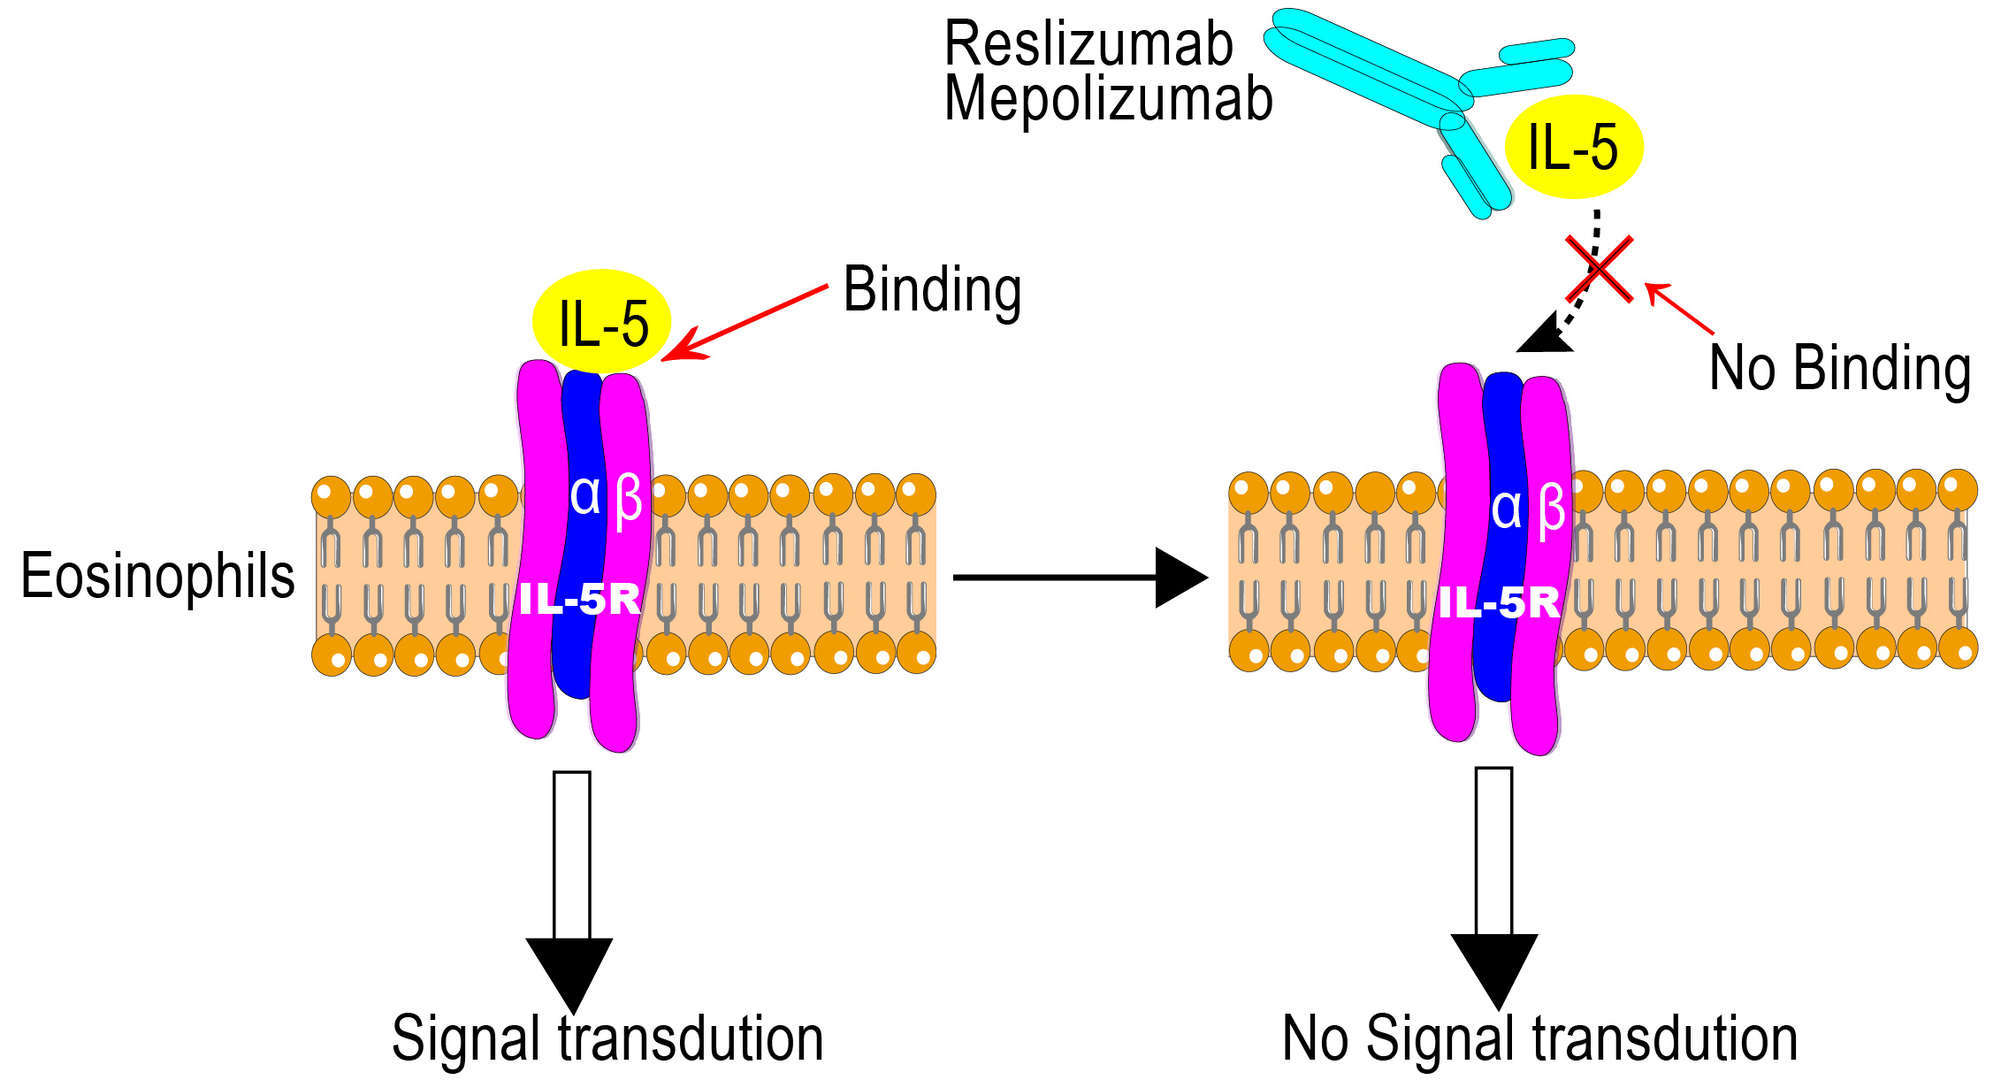 Mechanism of Action of Mepolizumab